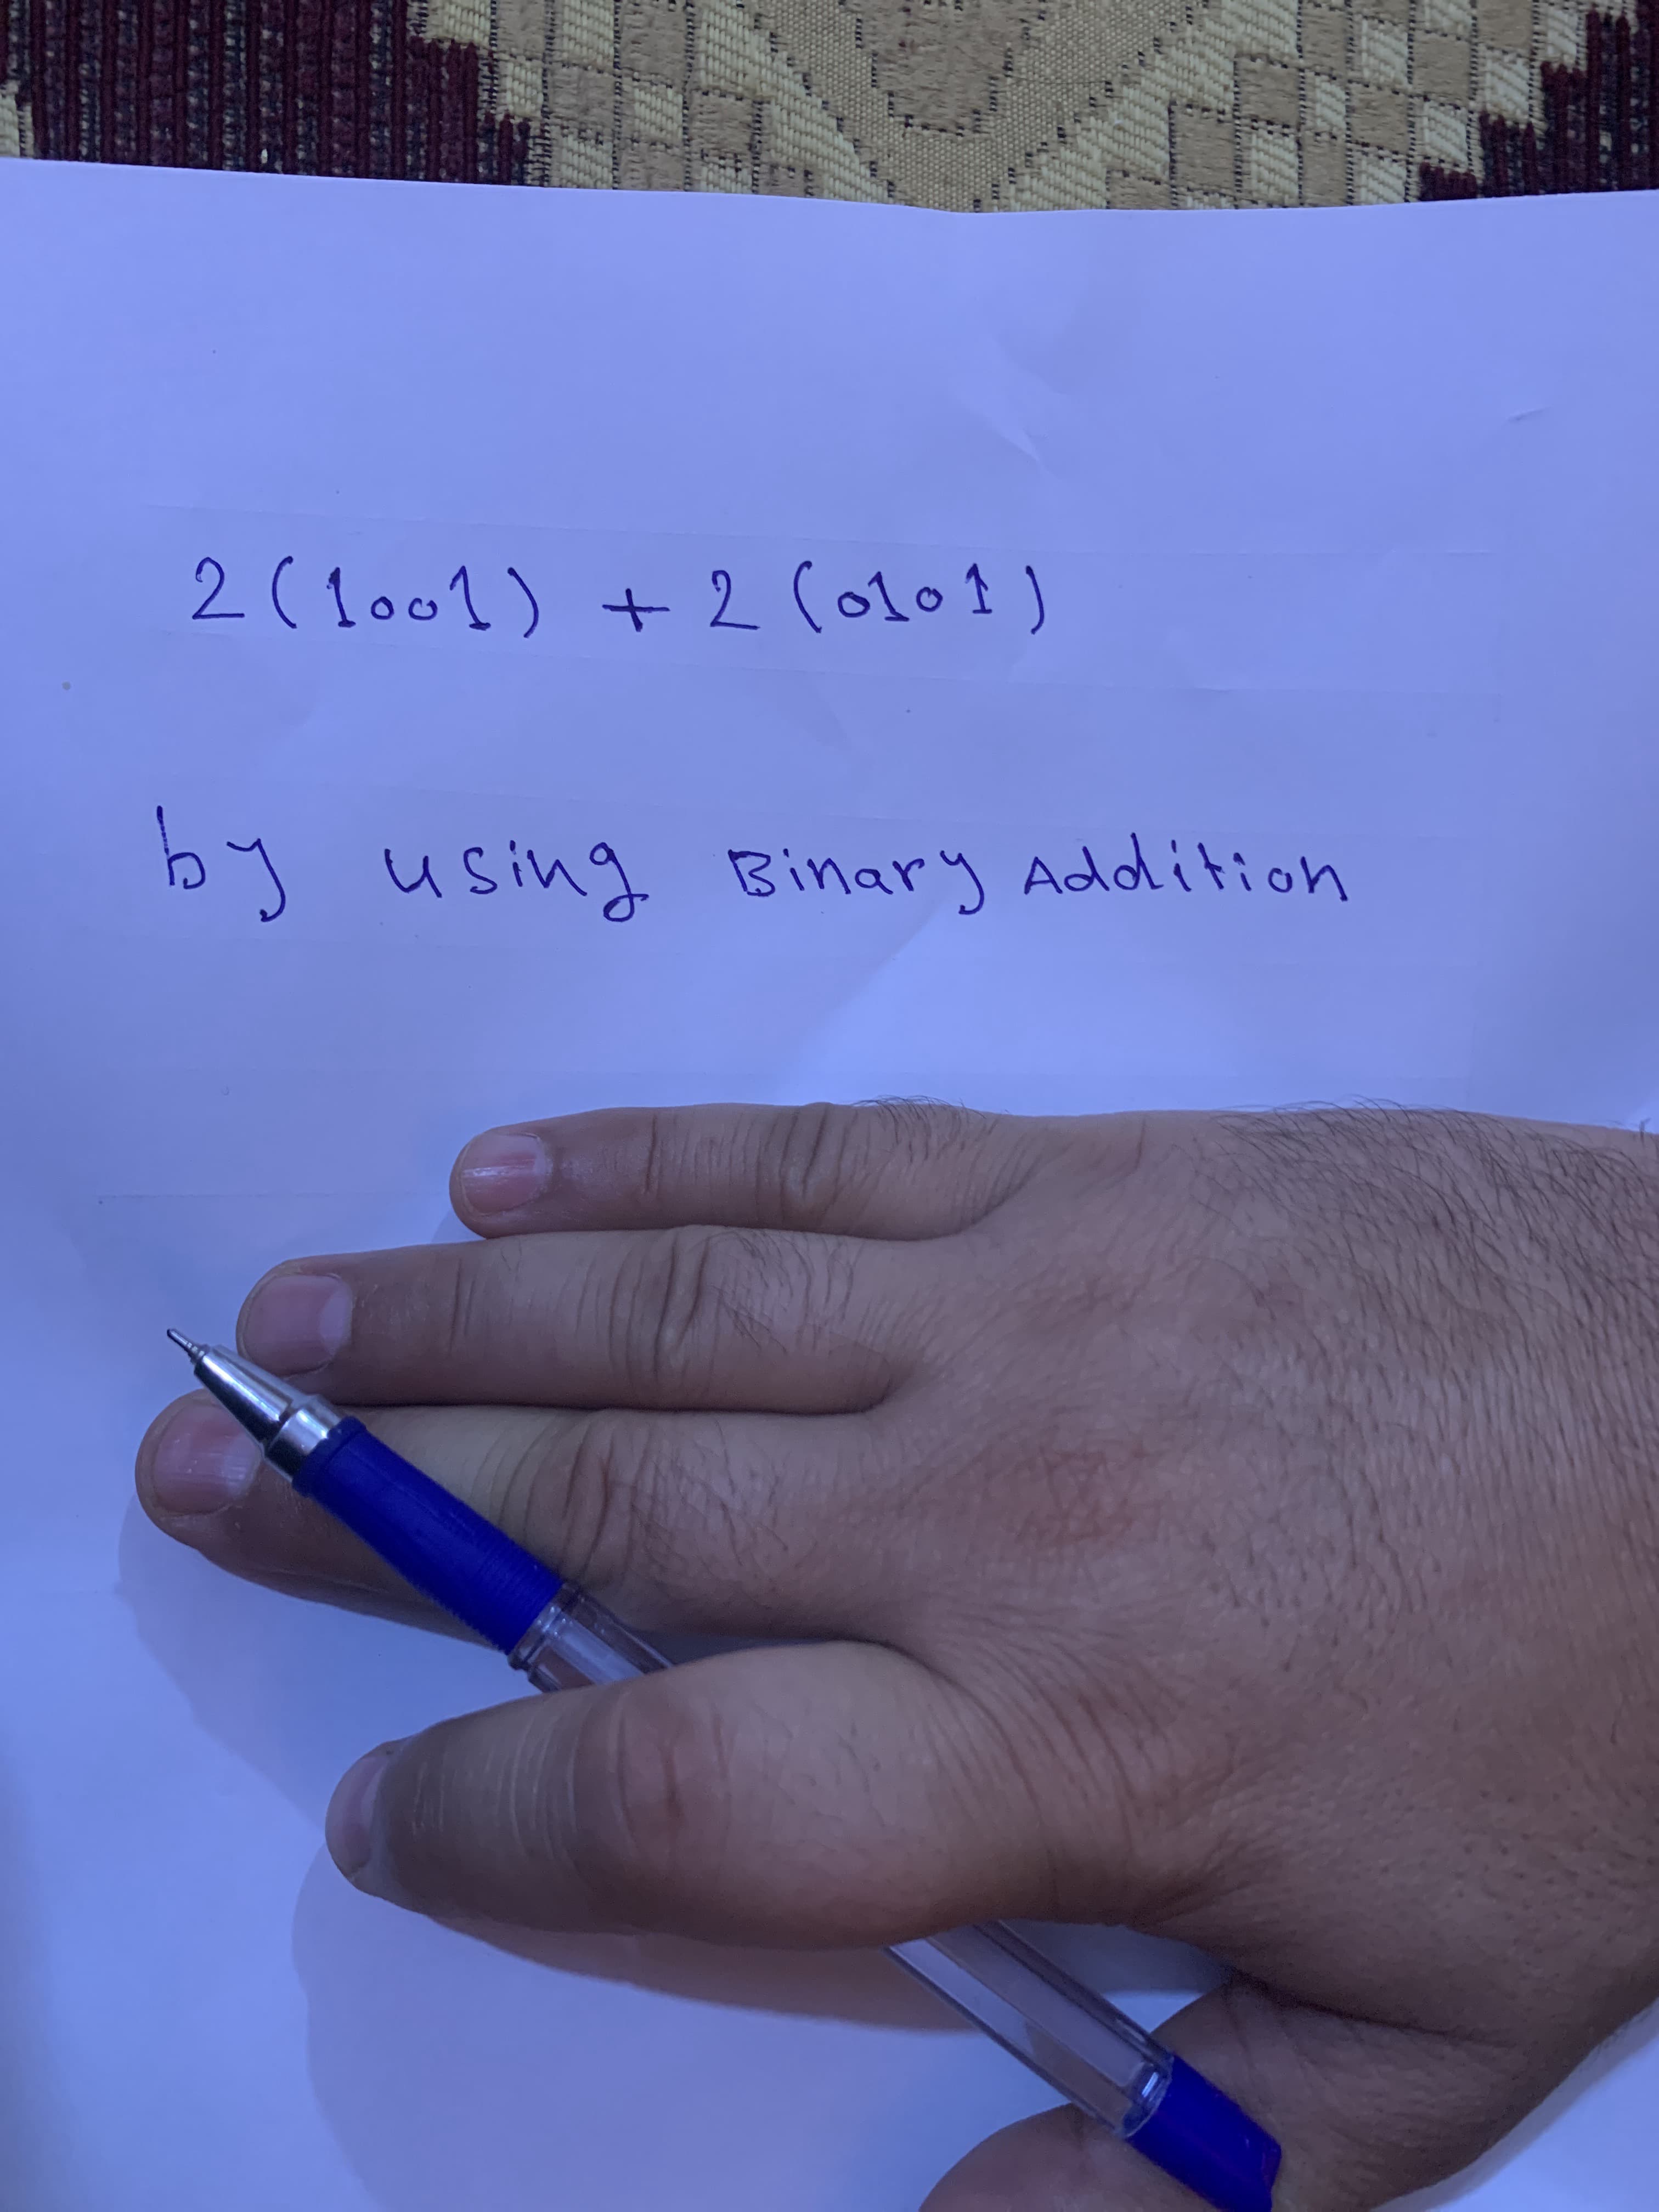 2(1o01) + 2 Col01)
by using Binary Addition
